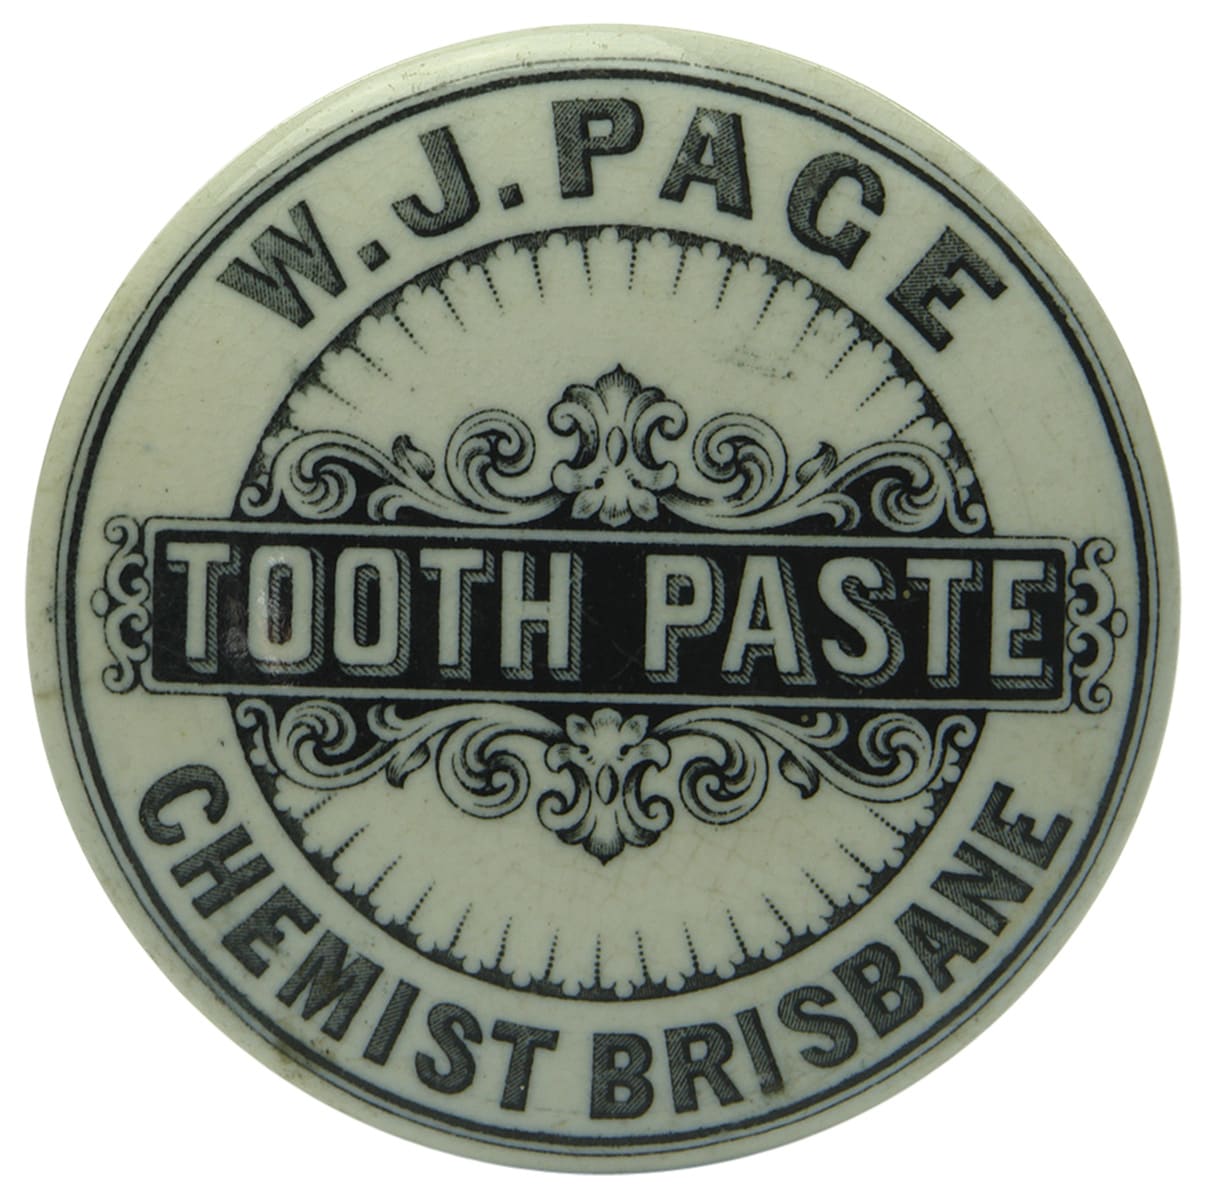 Page Chemist Brisbane Tooth Paste Pot Lid